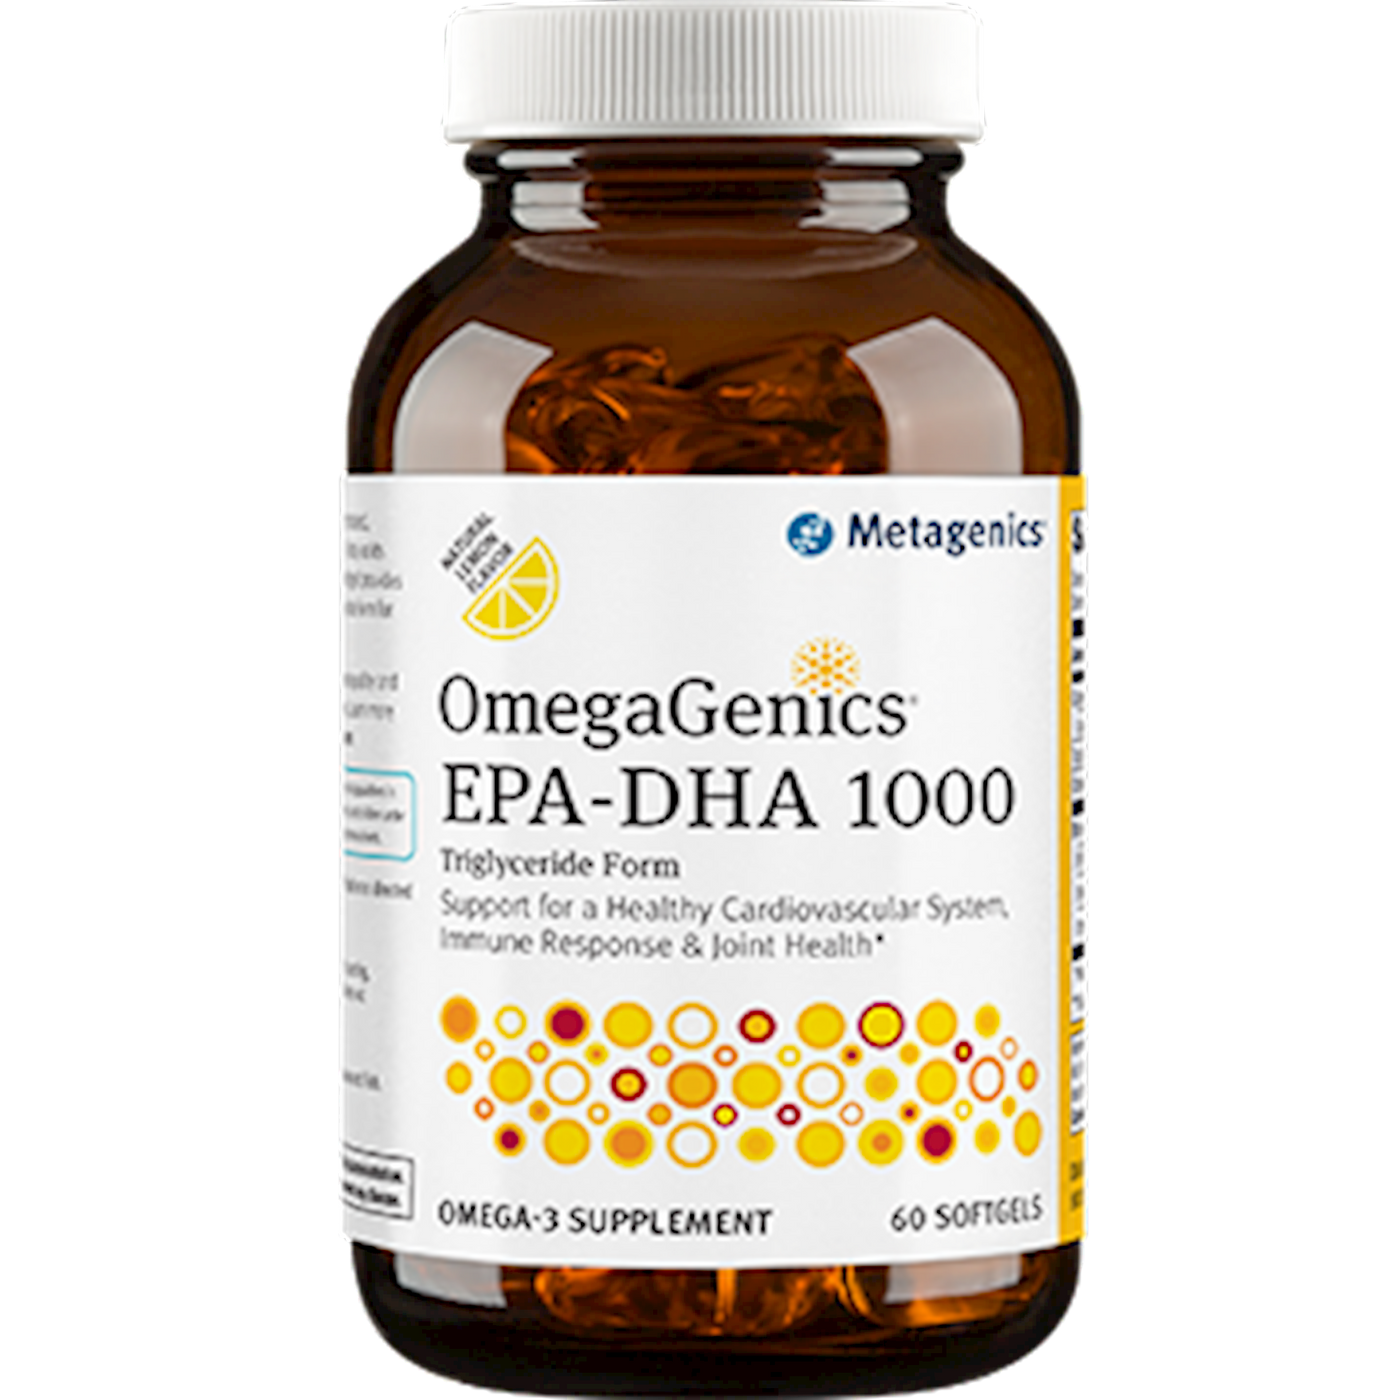 OmegaGenics EPA-DHA 1000  Curated Wellness